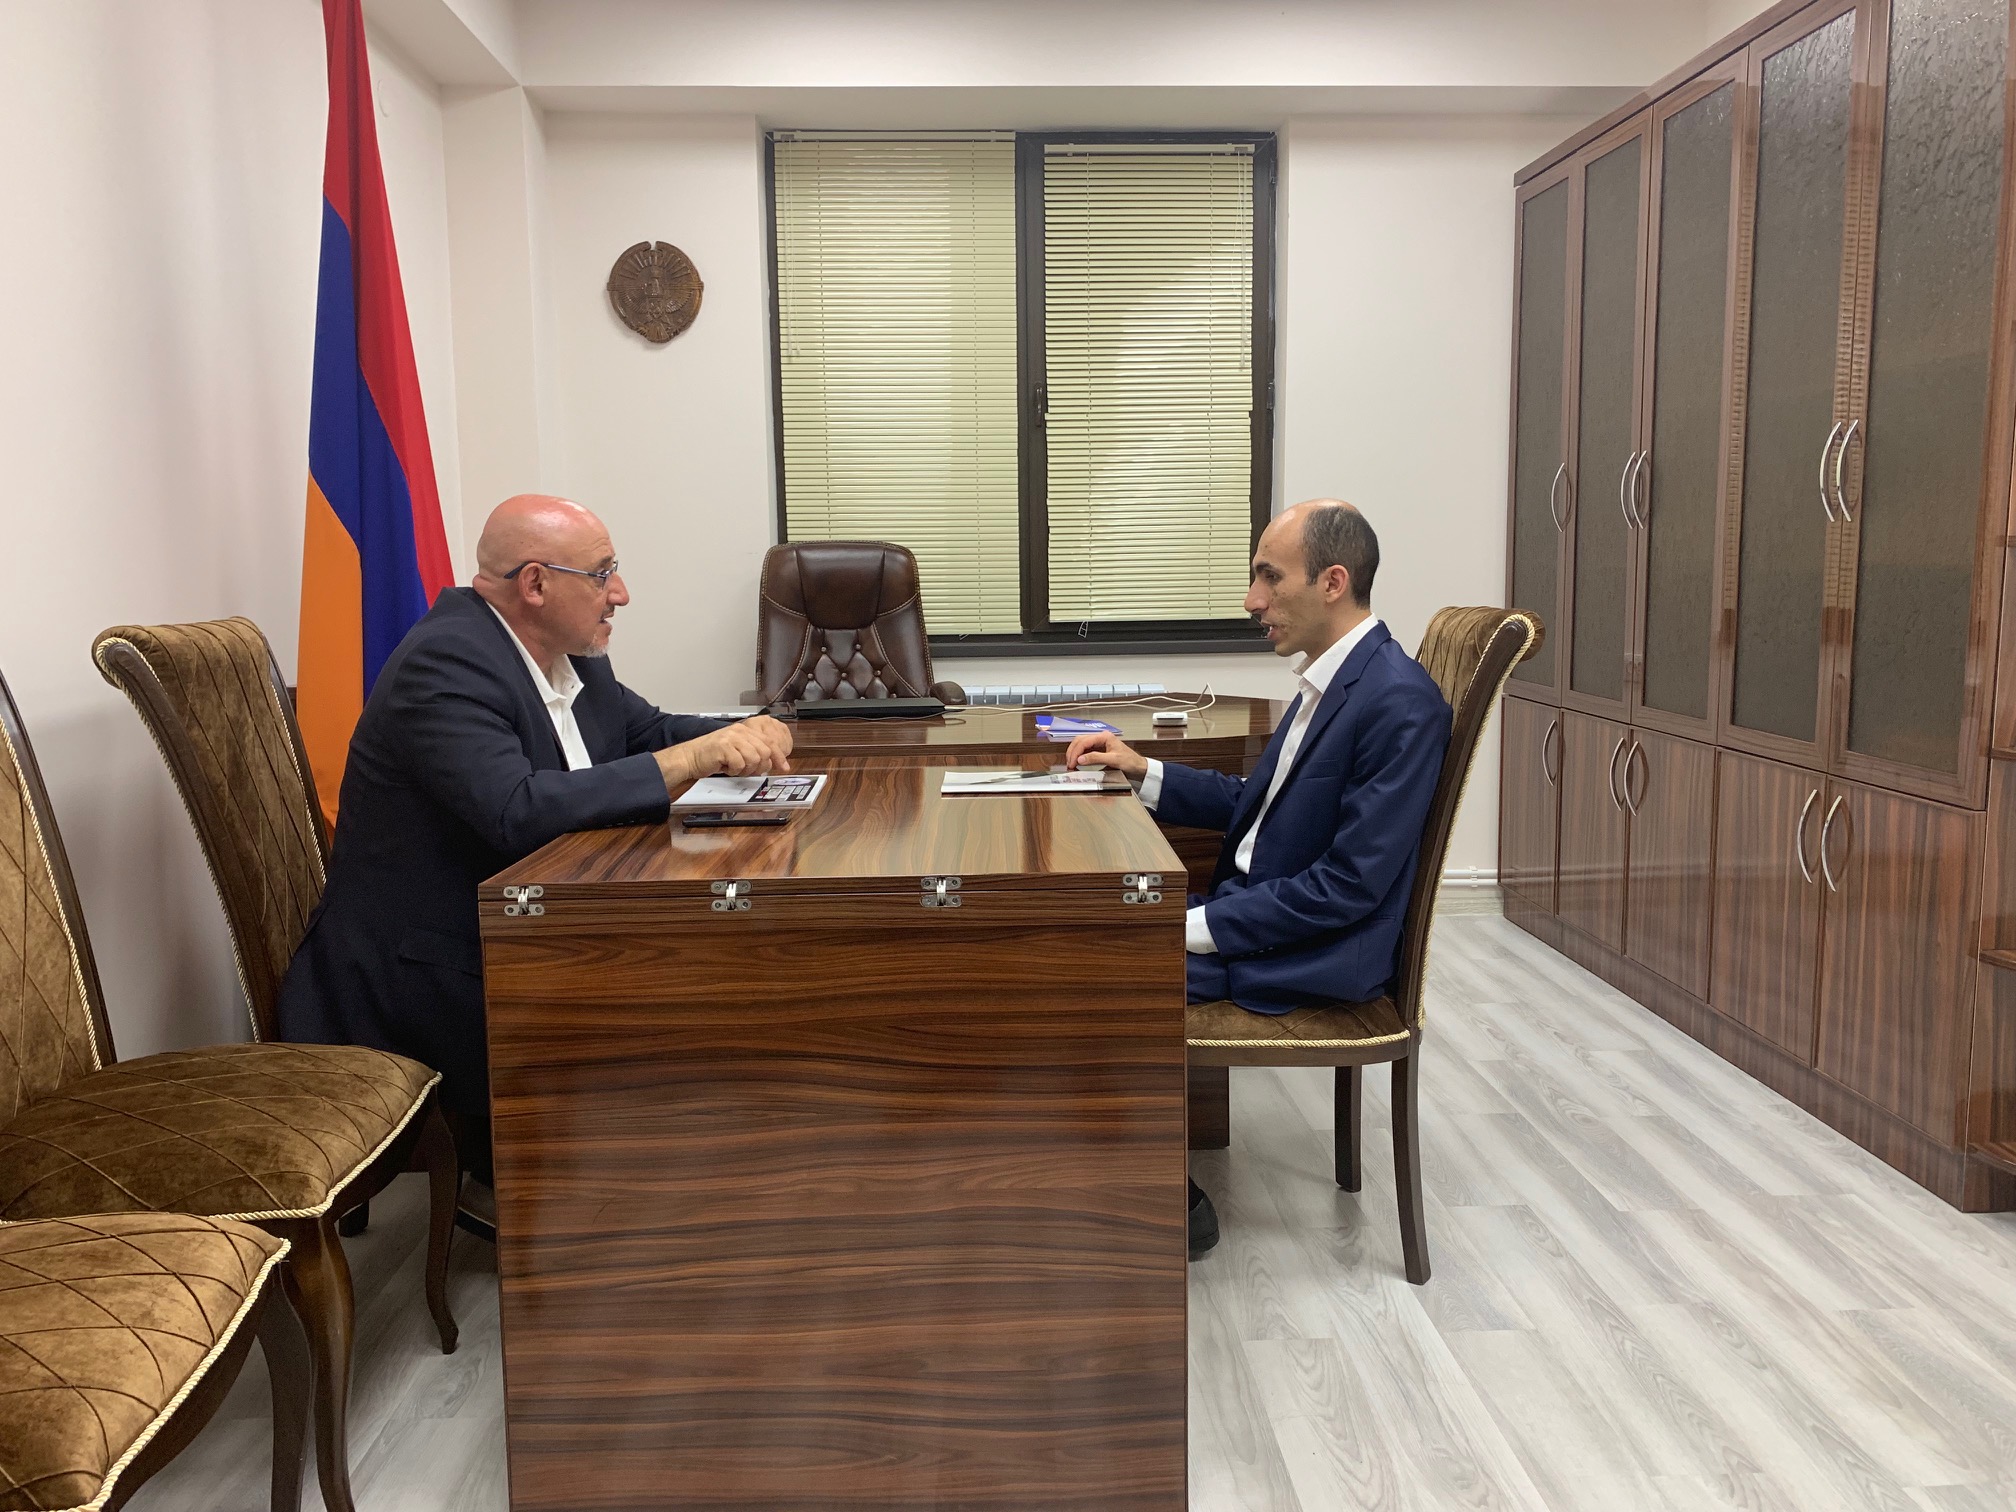 Artak Beglaryan emphasized the positive role of the Armenian Bar Association of the US in Artsakh